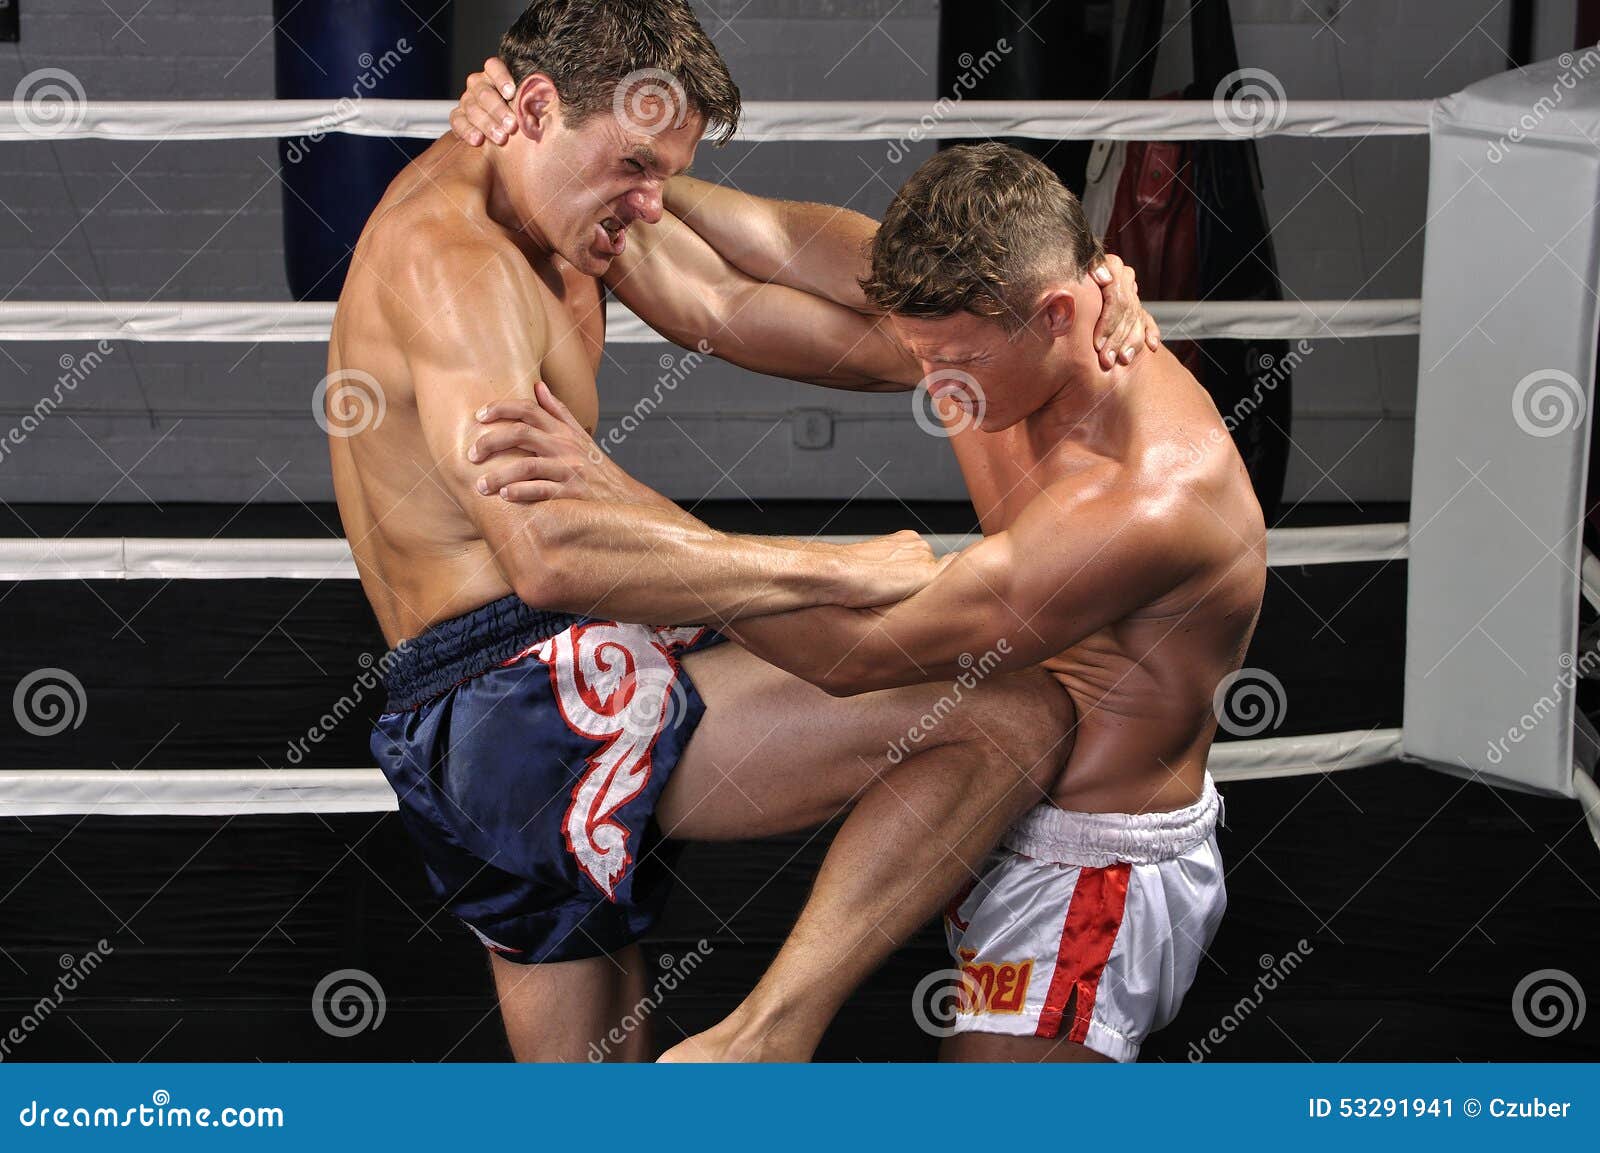 muay thai match in ring